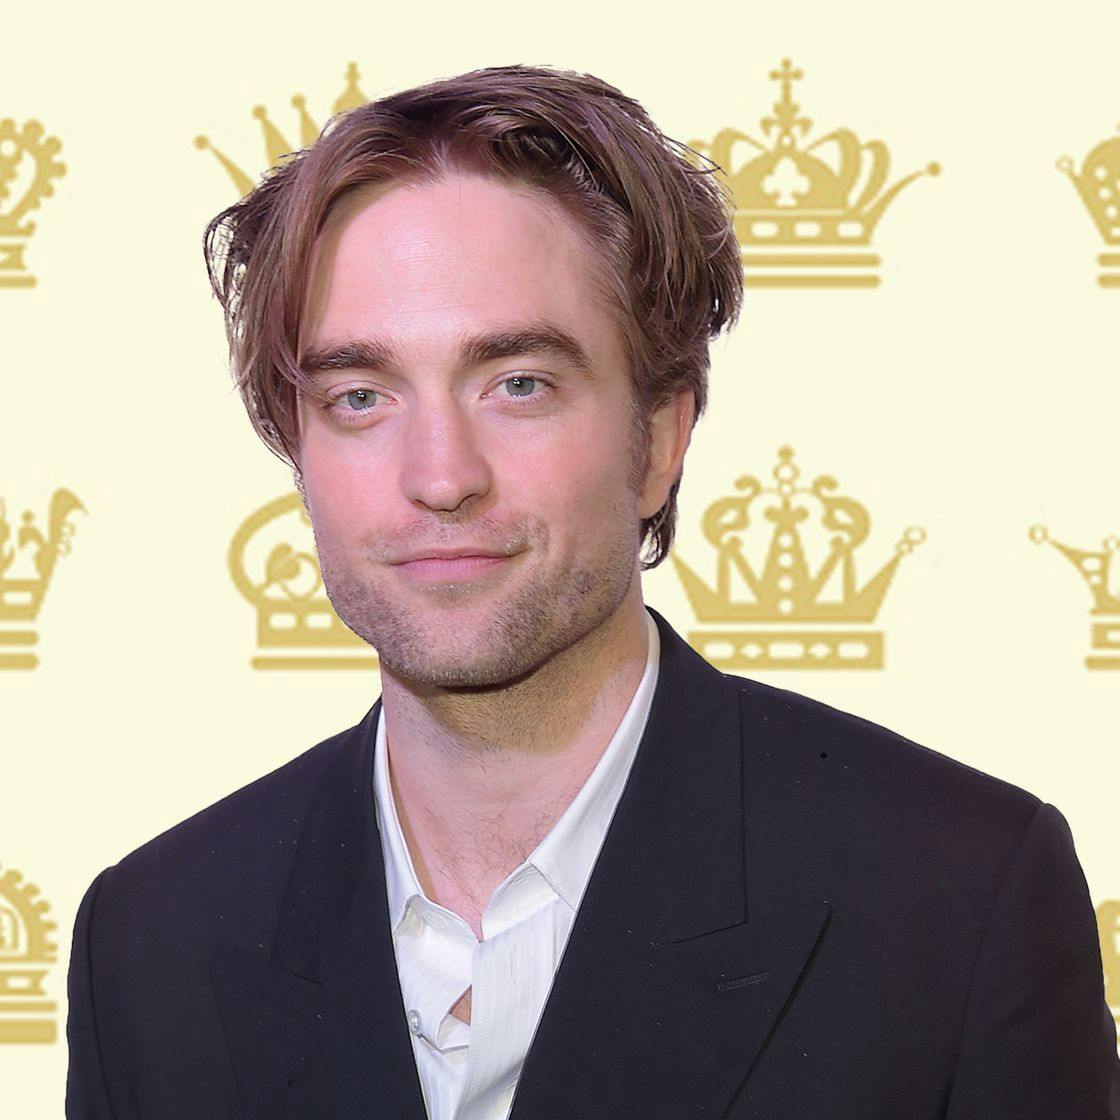 The King trailer: Robert Pattinson's long blonde hair goes viral